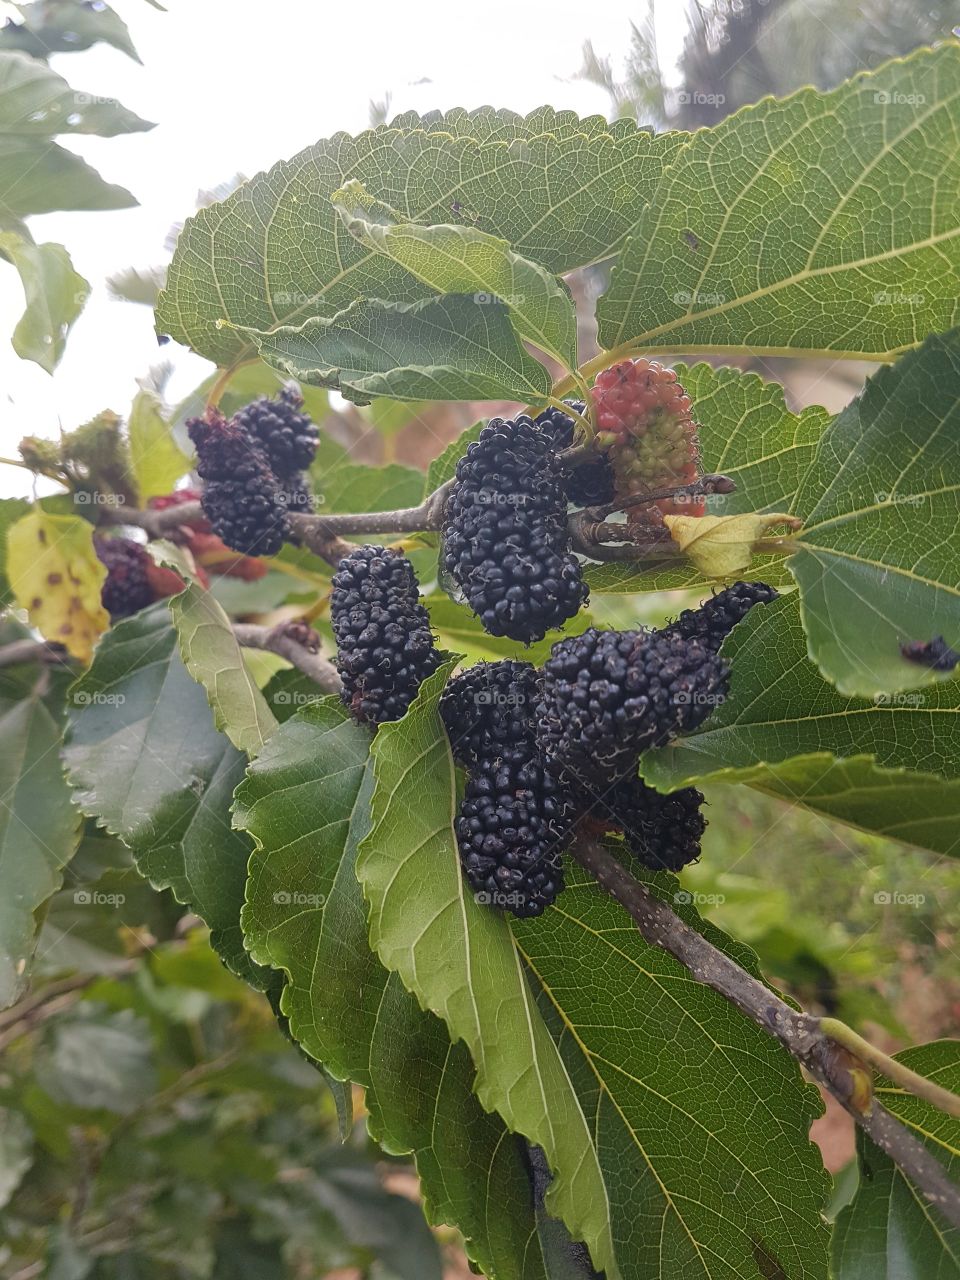 Beautiful fruits, who likes blackberry?